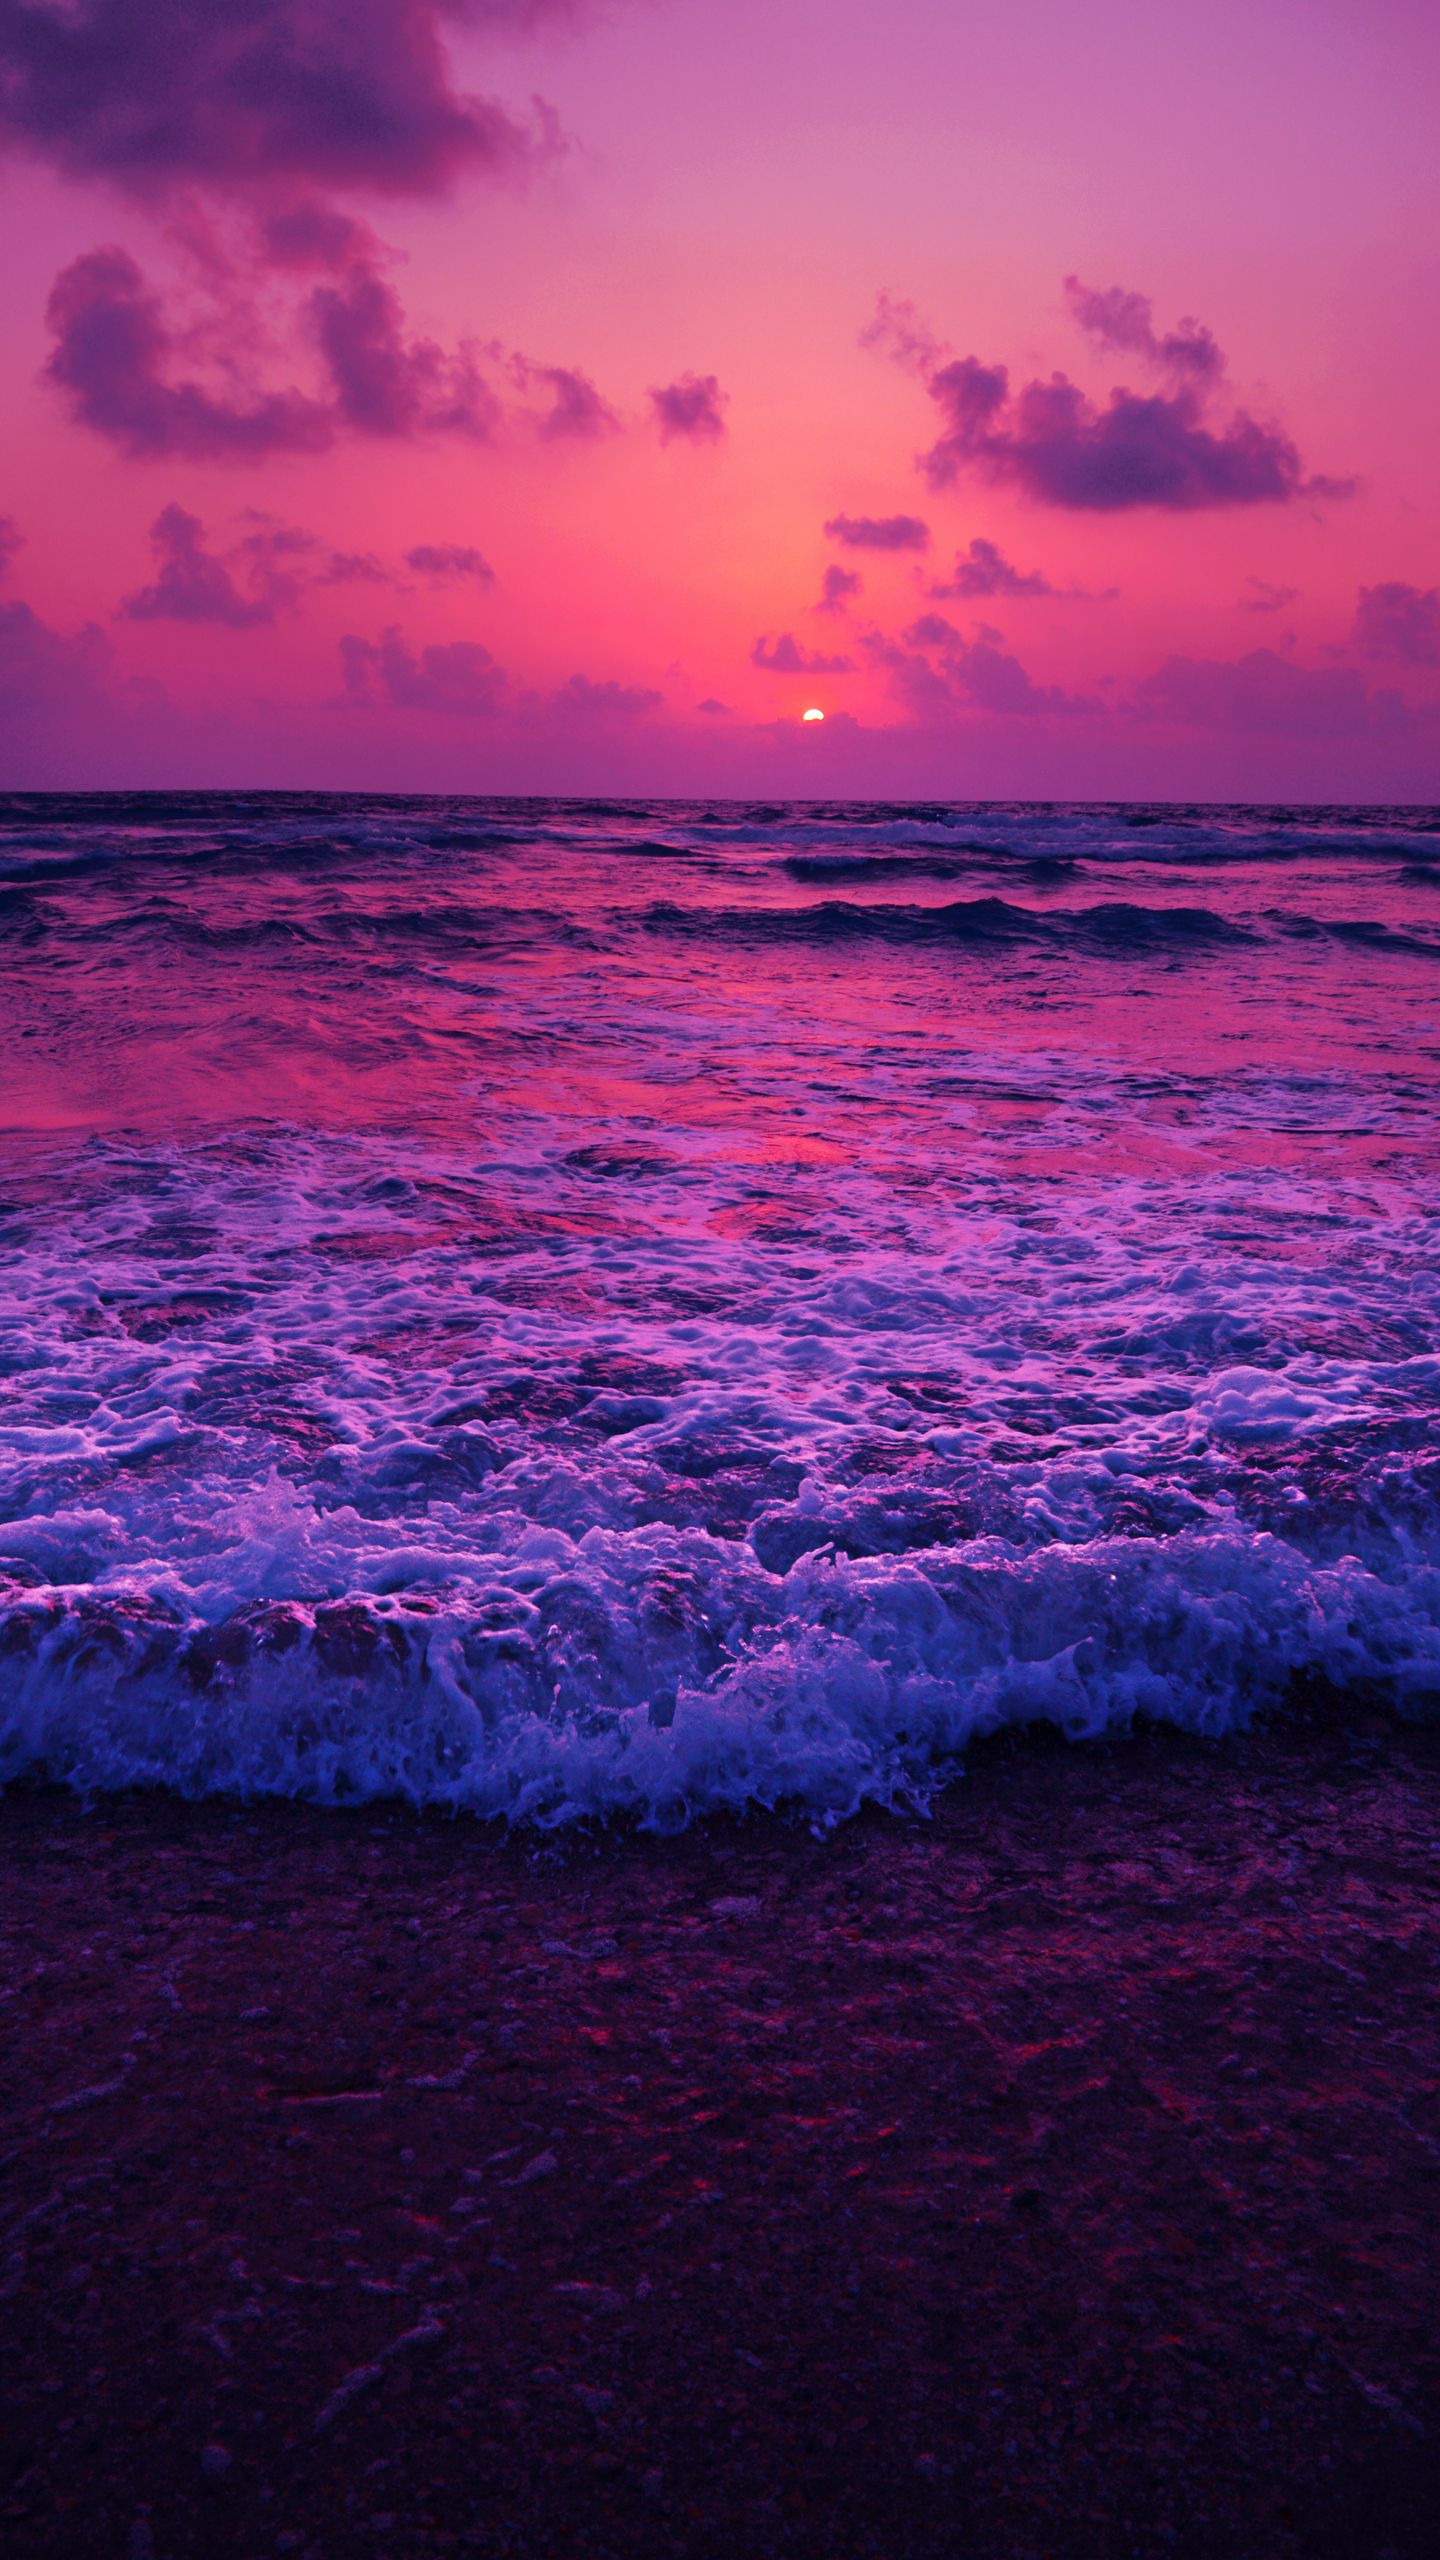 Download wallpaper 1440x2560 sea, sunset, horizon, surf, foam qhd samsung galaxy s s edge, note, lg g4 HD background